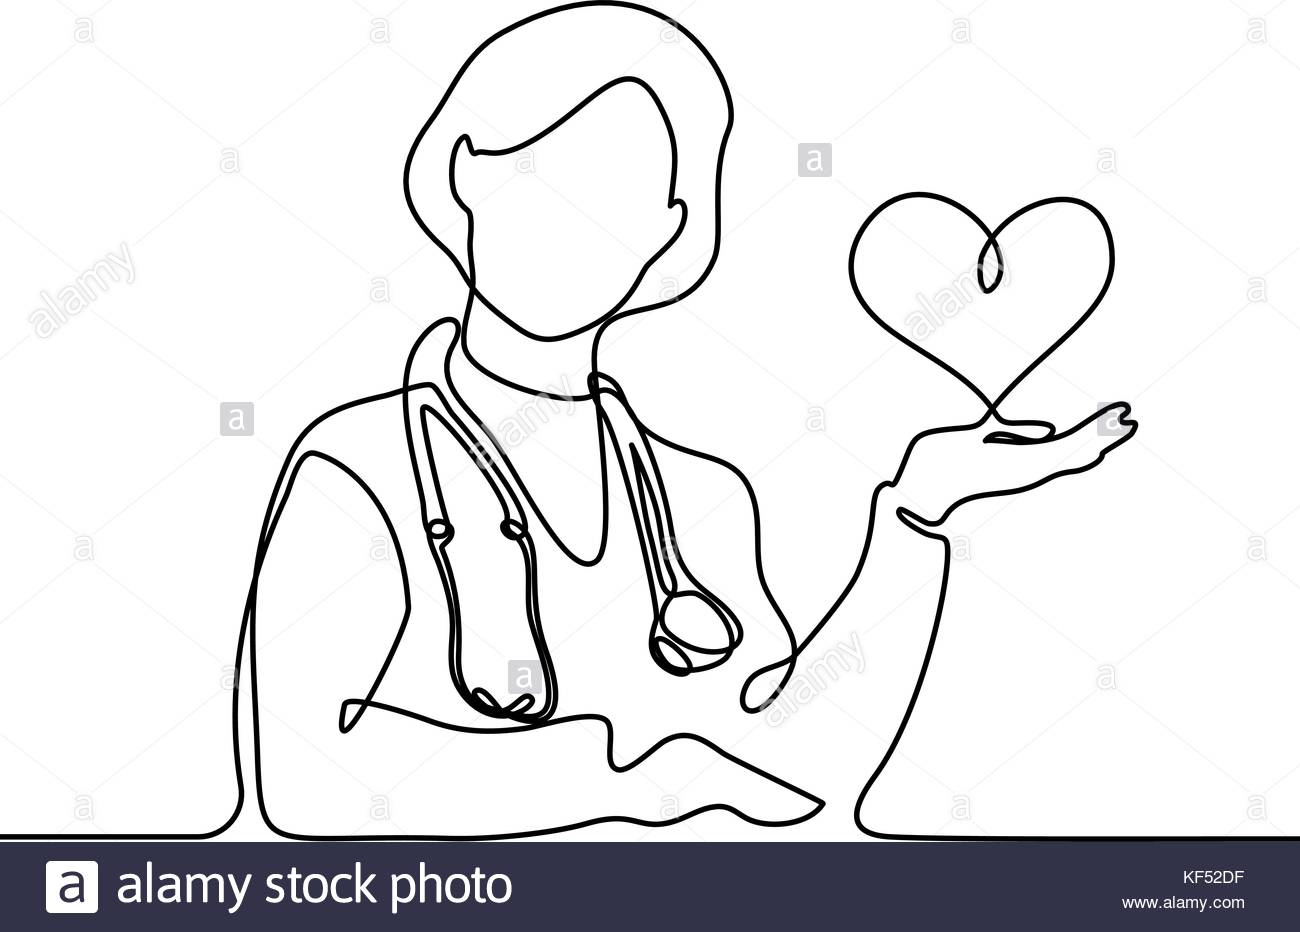 Doctor With Stethoscope Garder Coeur. Ligne Continue Dessin pour Stéthoscope Dessin